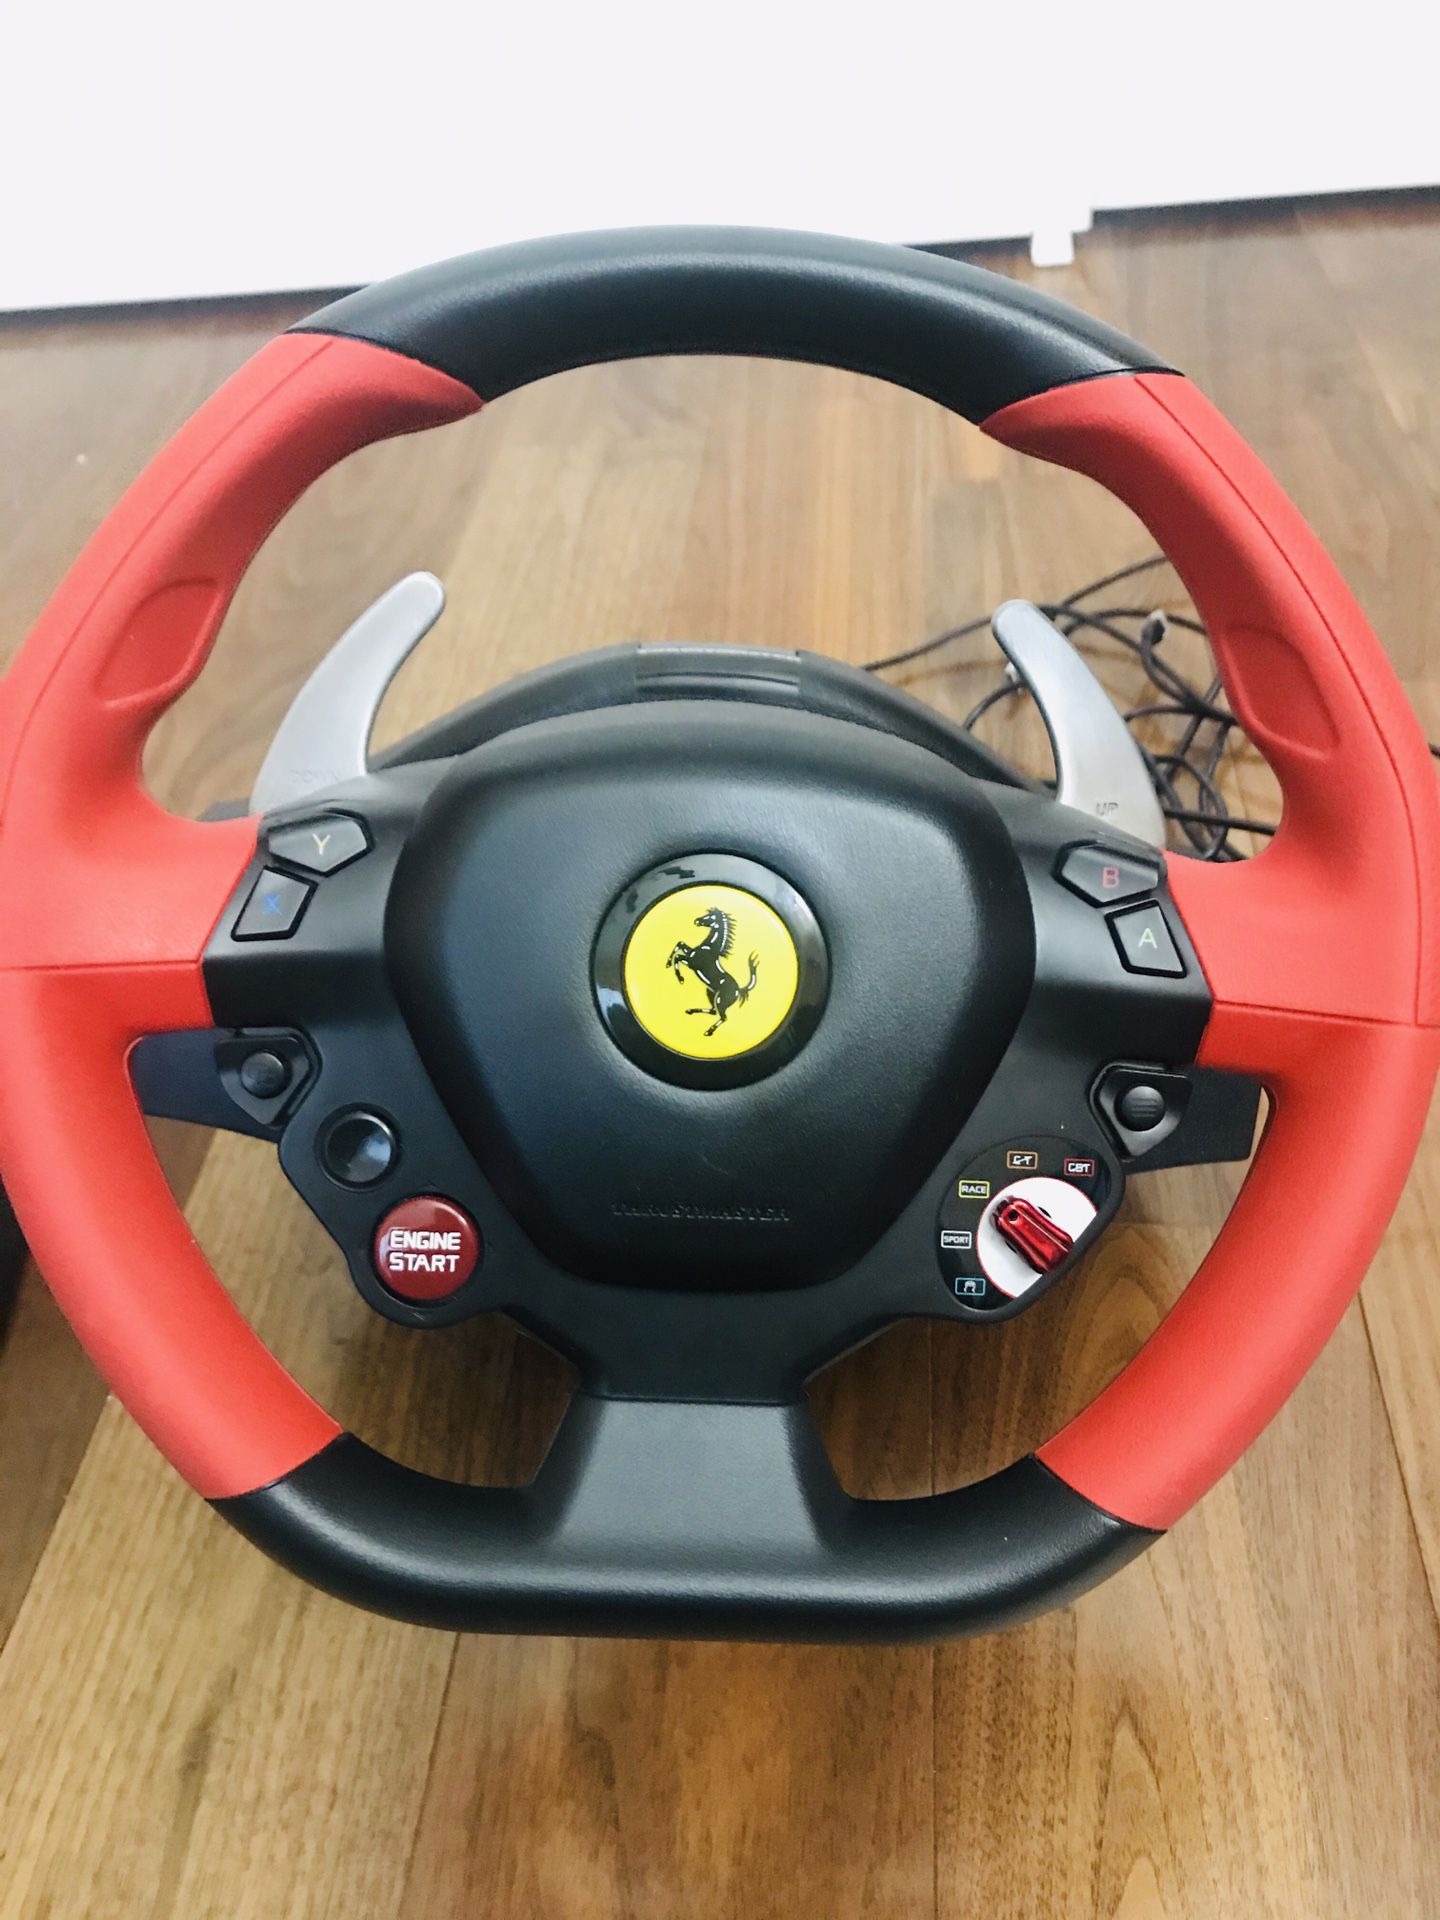 (Like new) Thrustmaster Ferrari 458 Spider Racing Wheel.